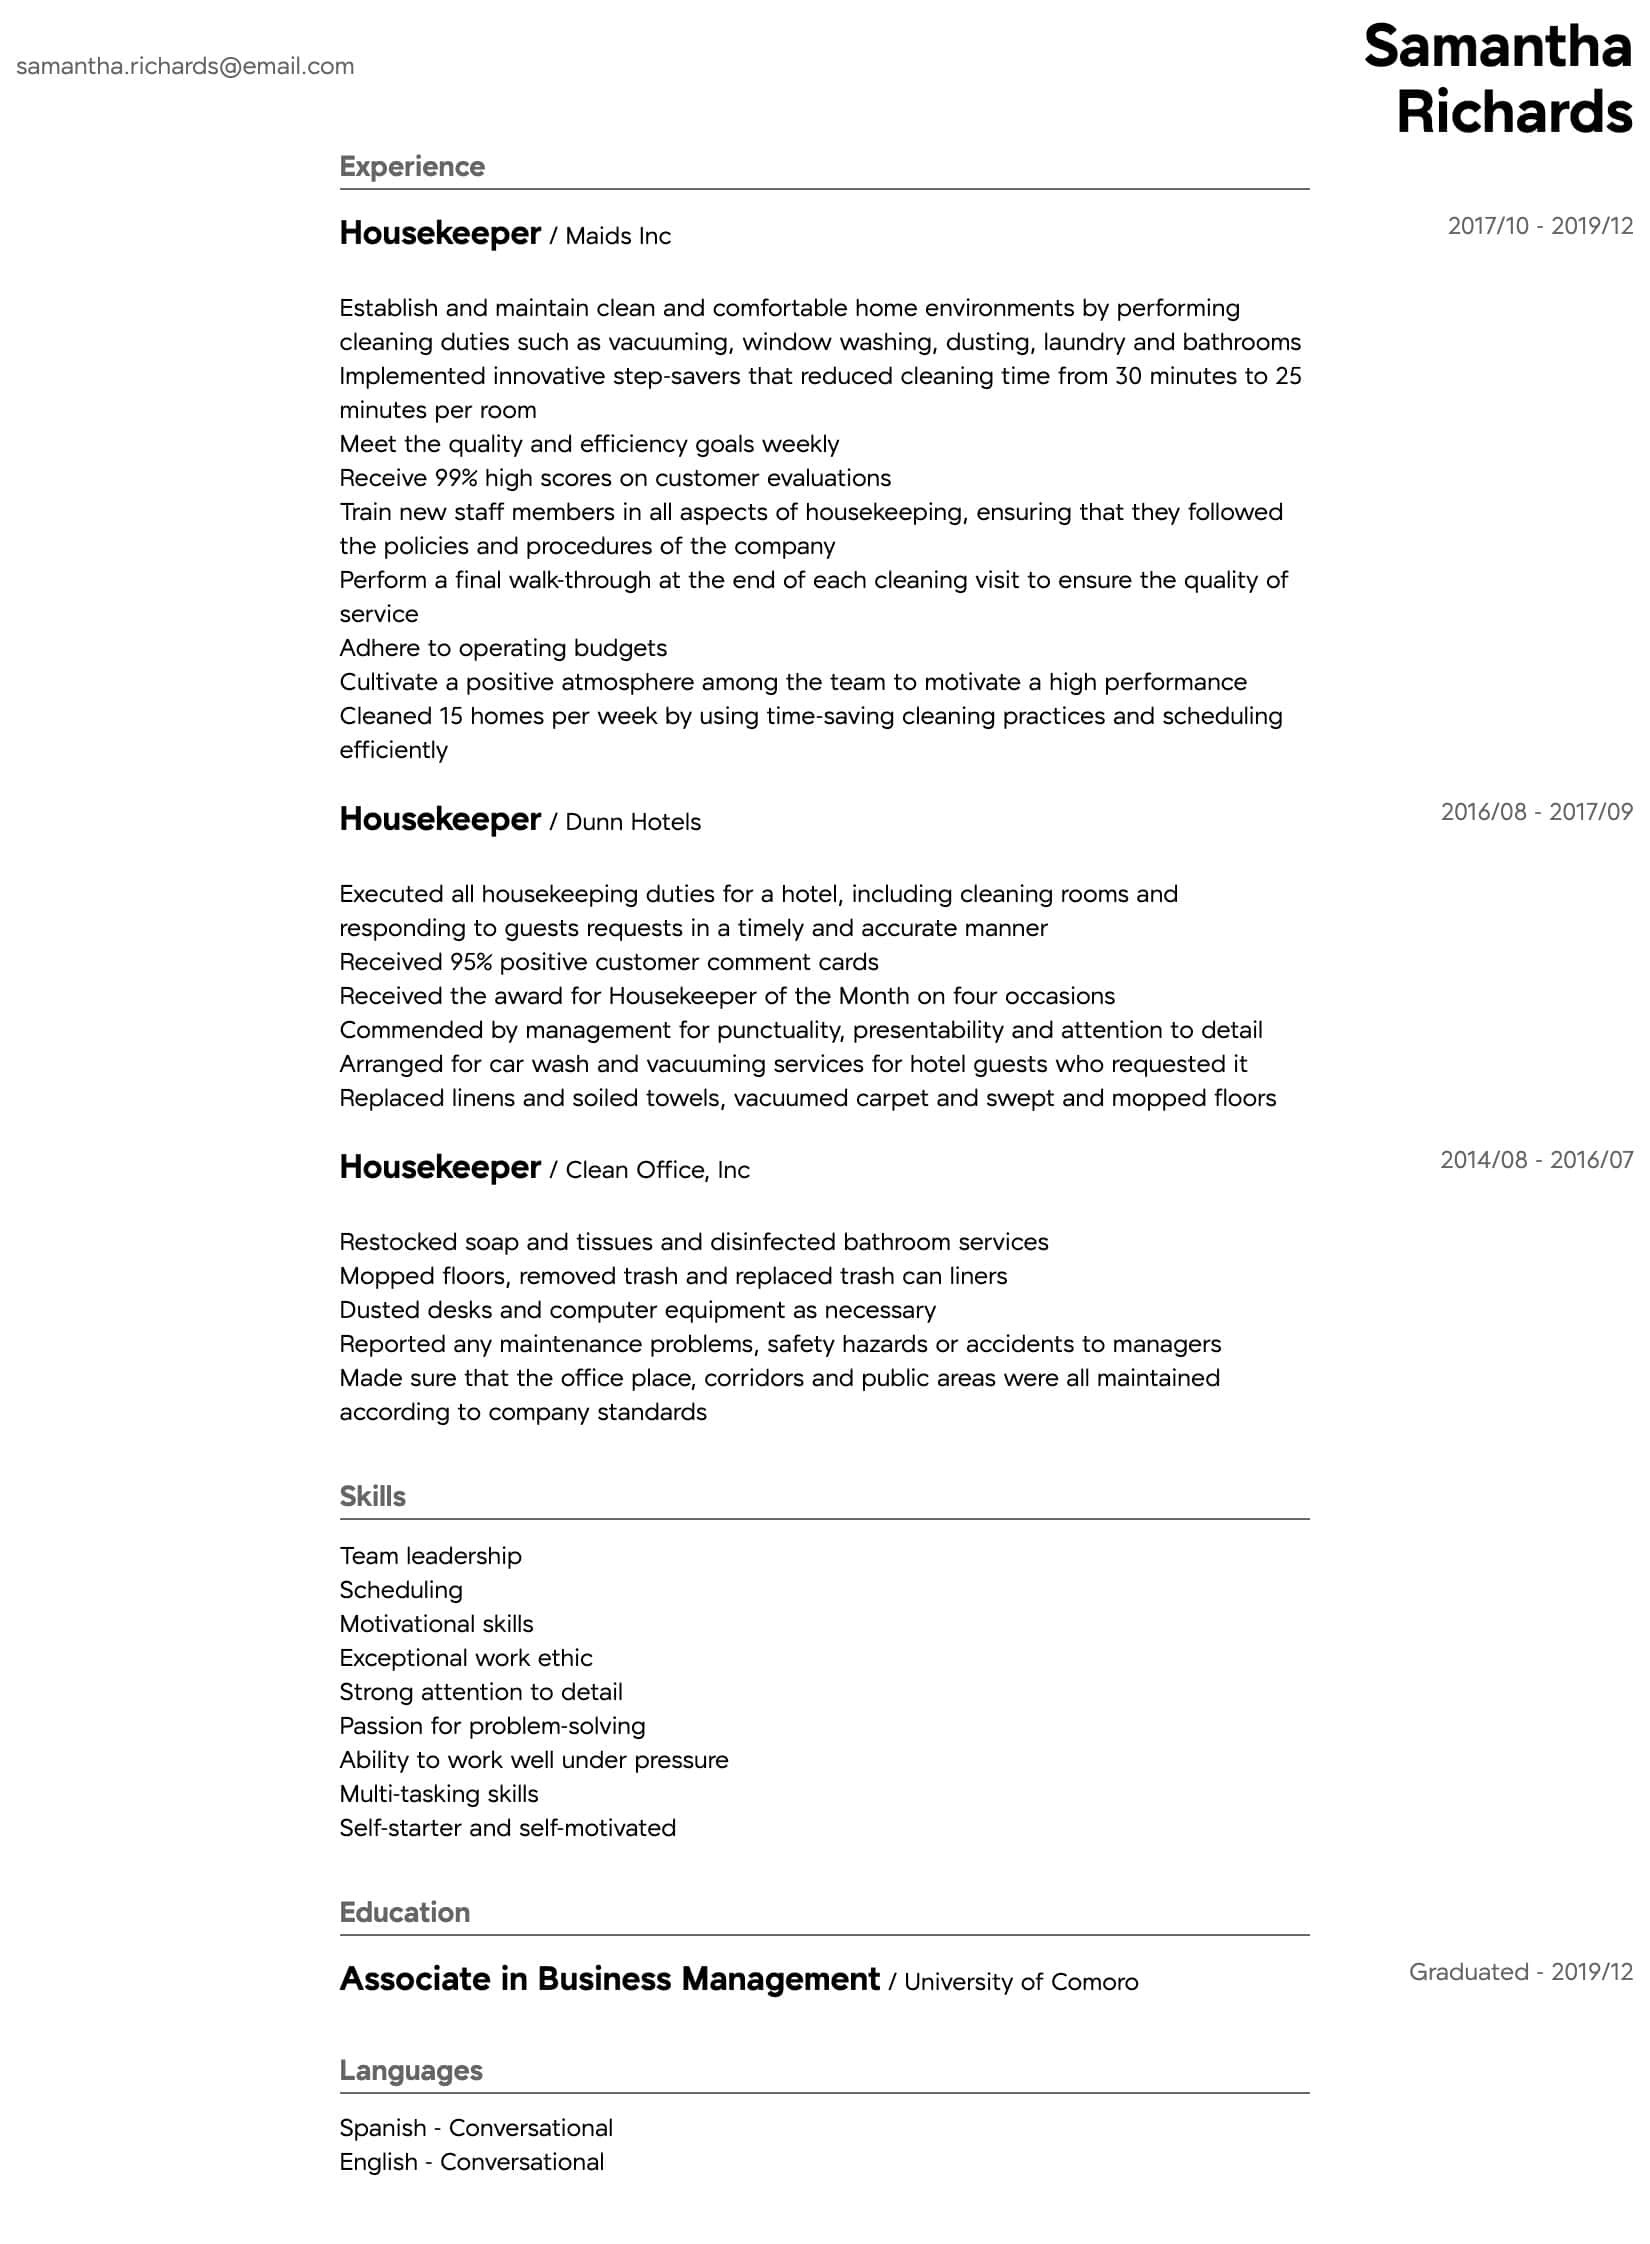 Sample Resume for Housekeeping Job In Hotel Housekeeper Resume Samples All Experience Levels Resume.com …